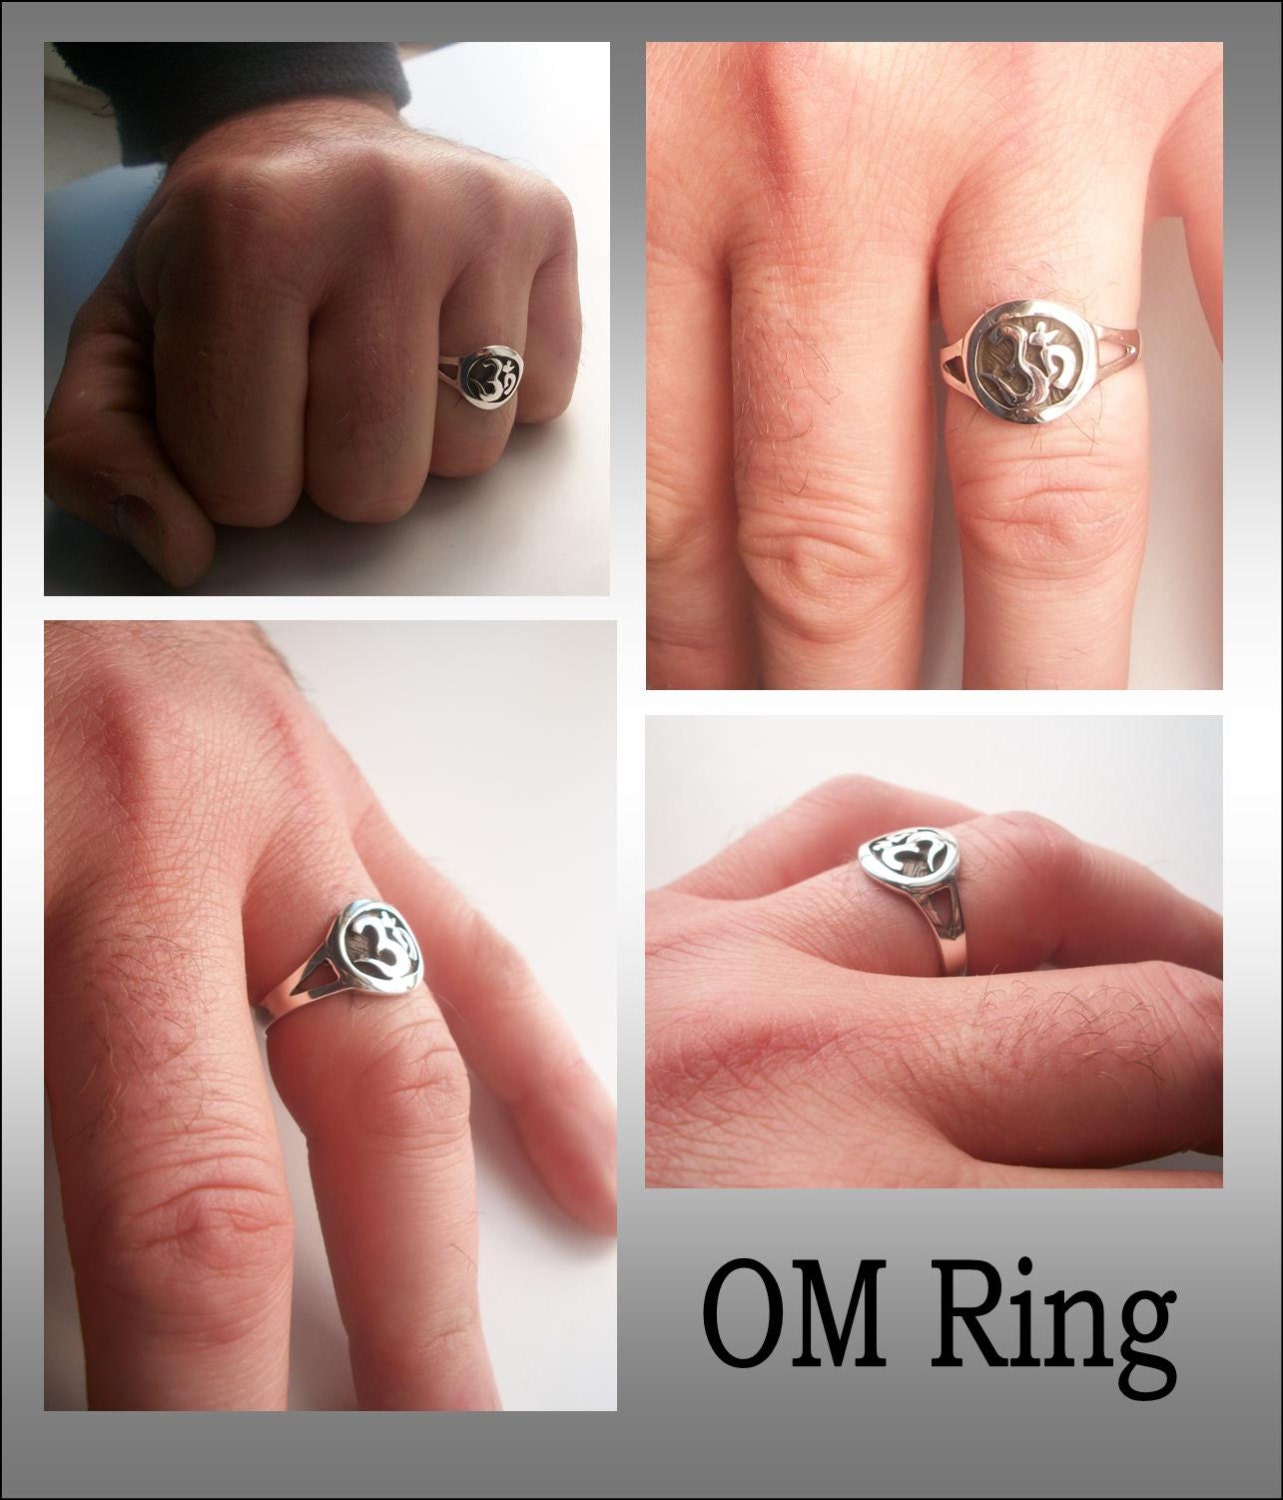 Ohm ring - Sterling Silver Aum Ohm OM ring  - All sizes - Reiki Meditation Mantra sound